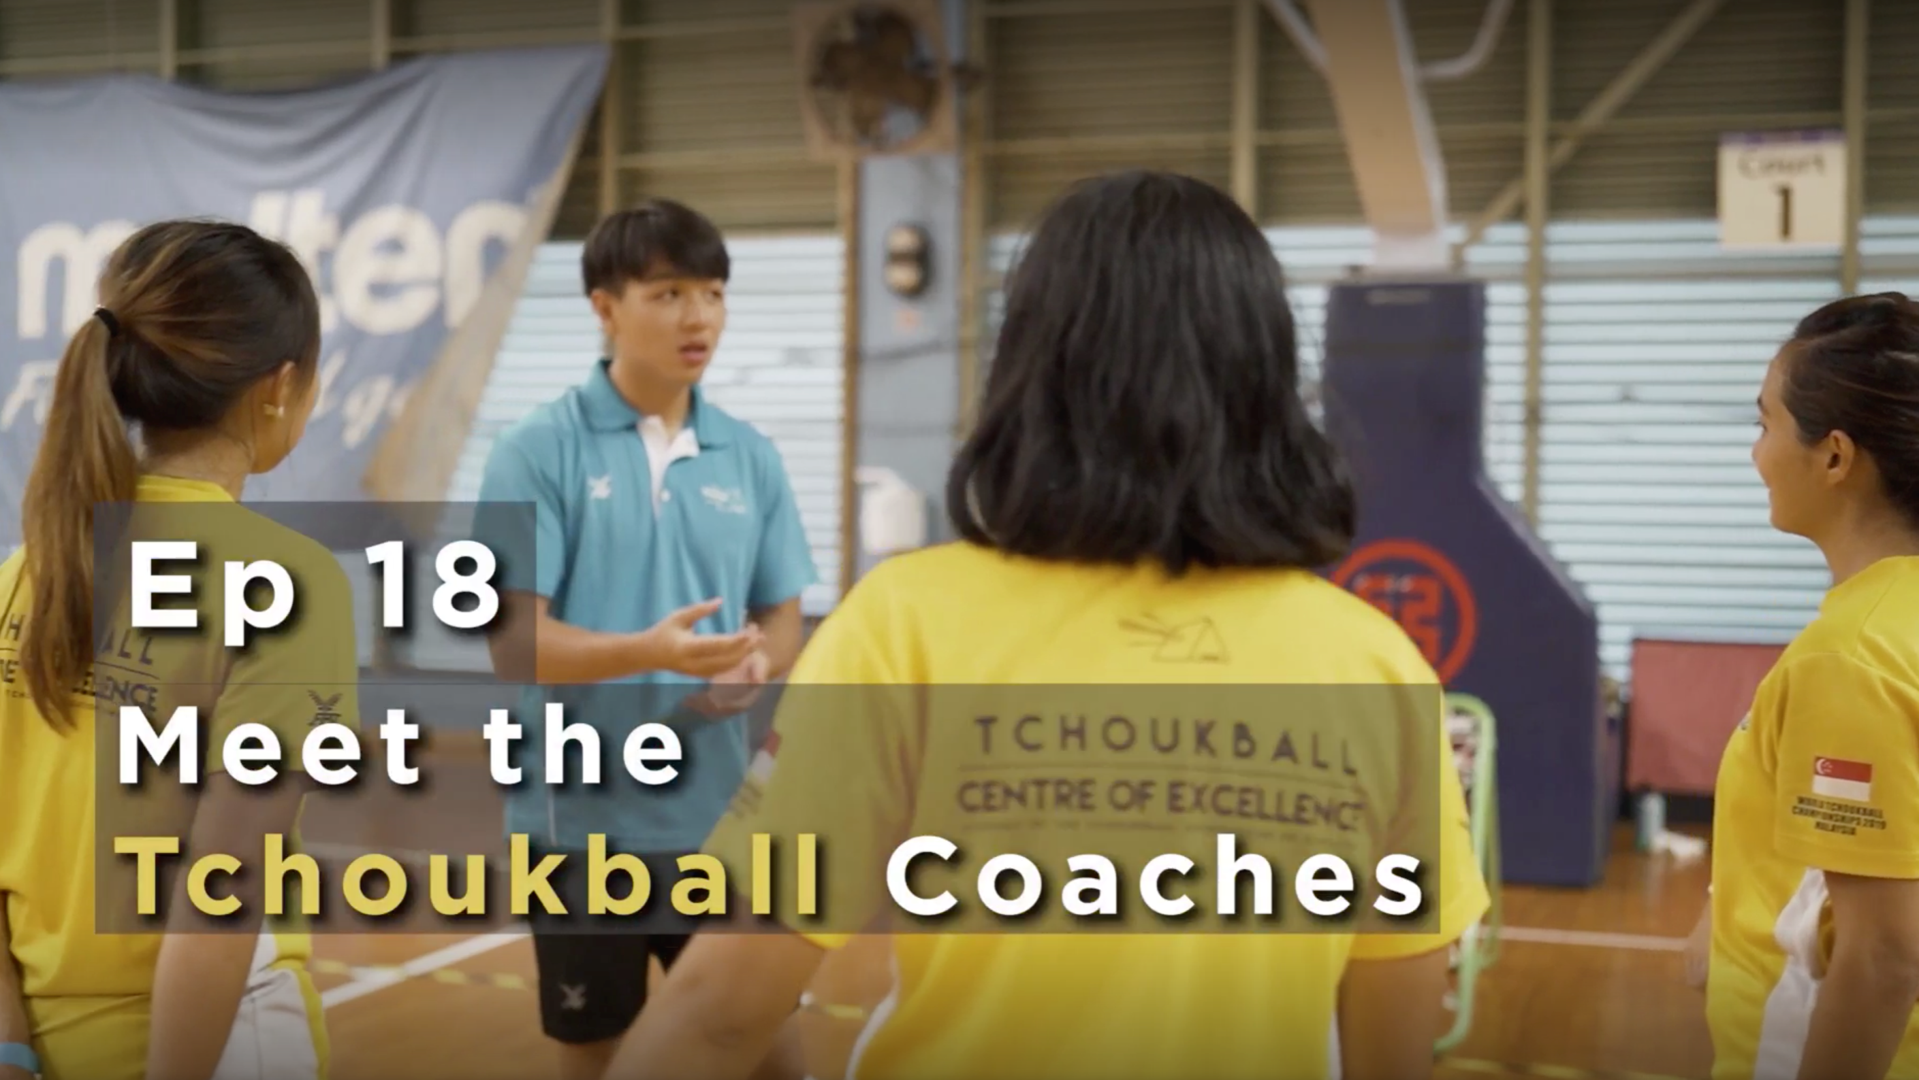 Ep 18 - Meet the Tchoukball Coaches